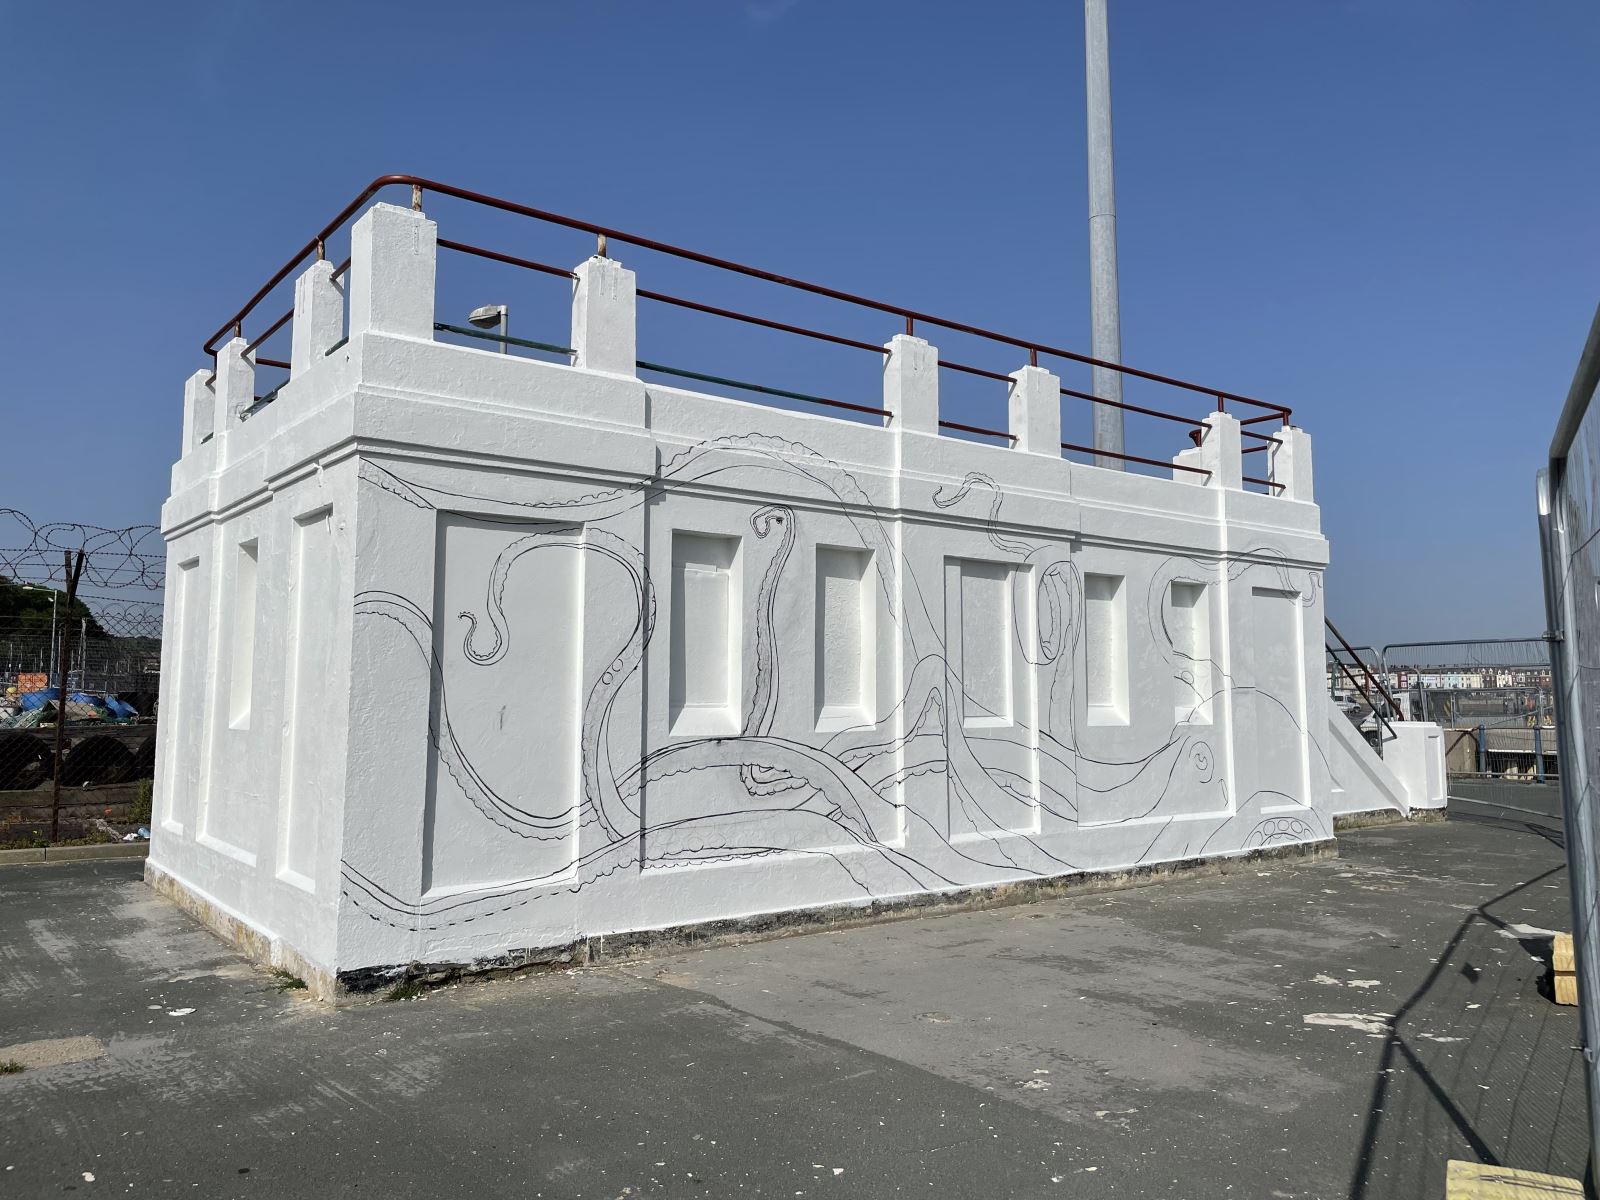 Building N, Weymouth Peninsula art outlines